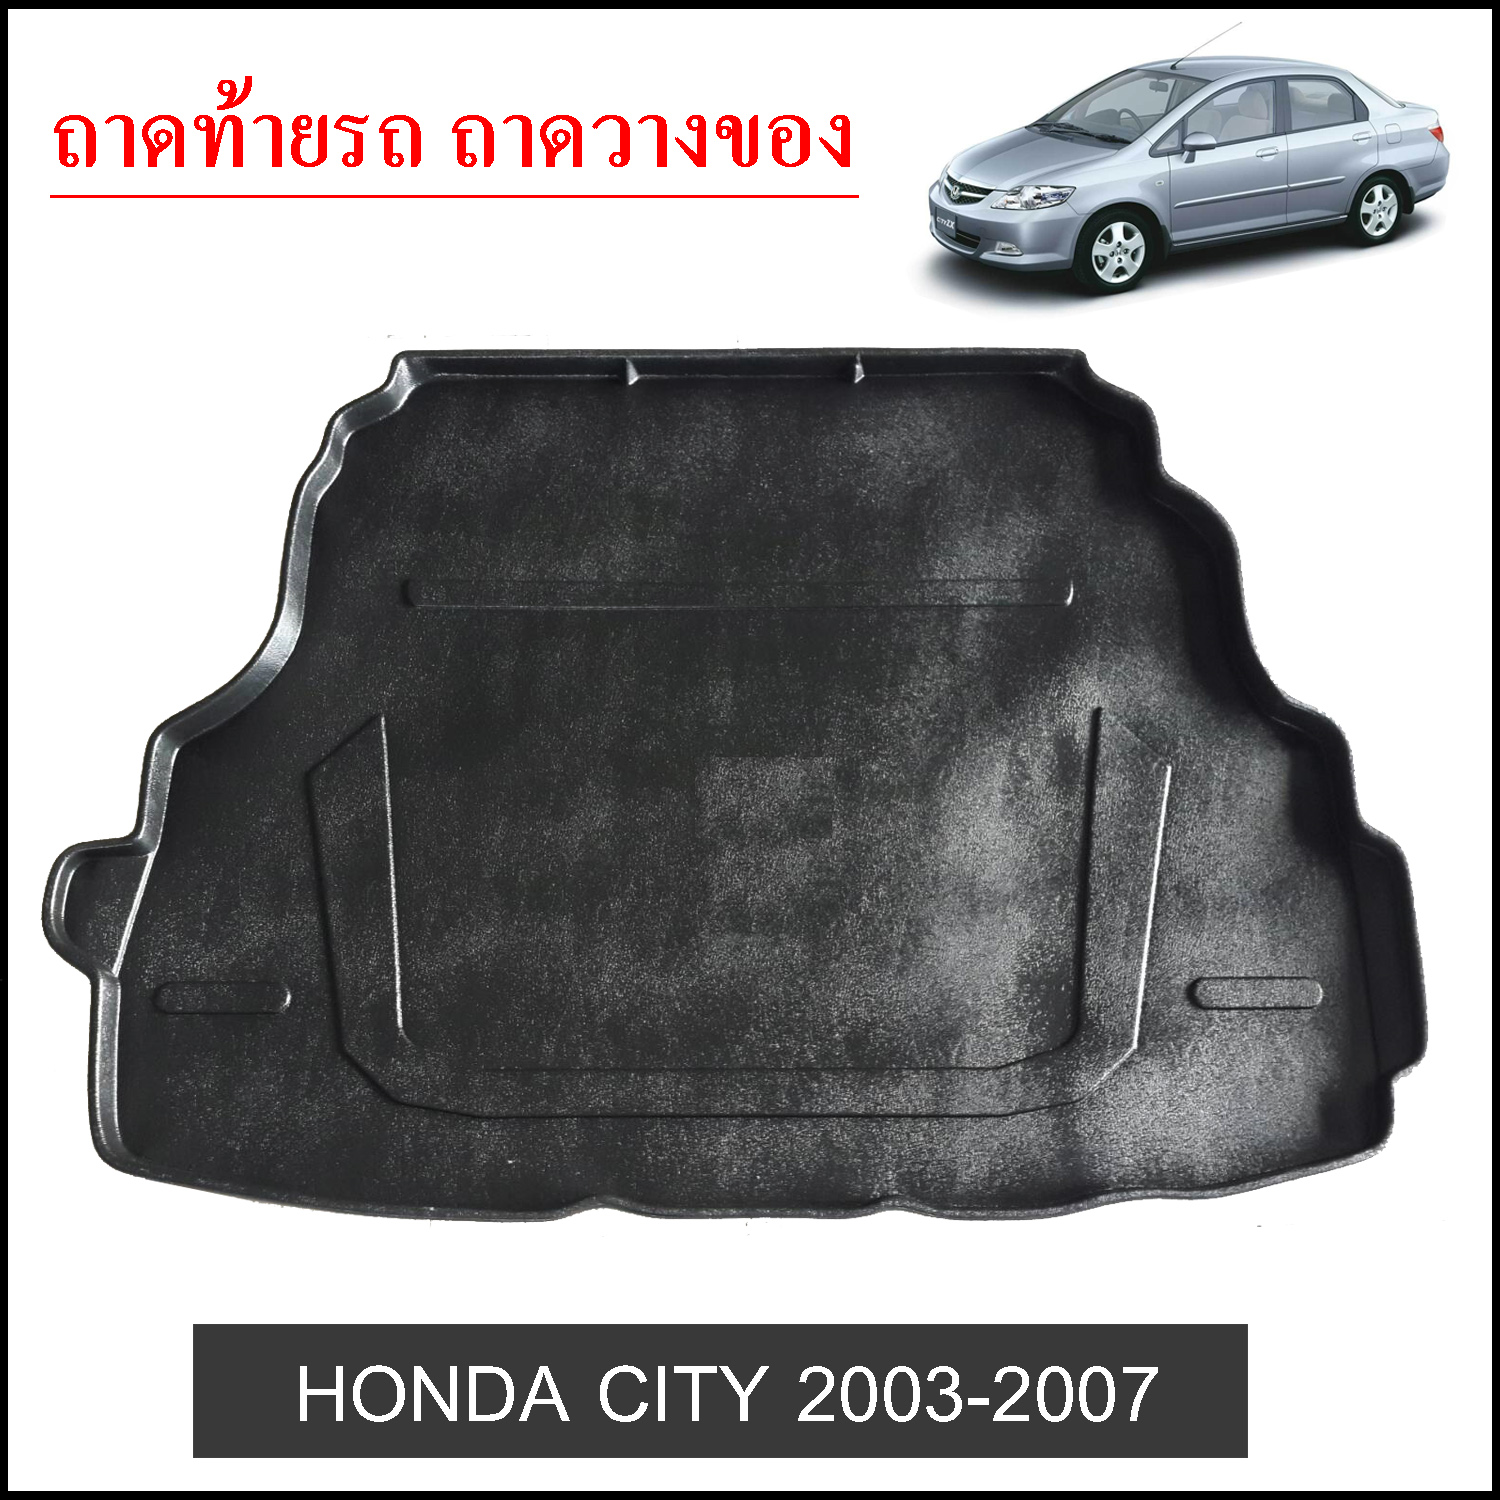 Honda City 2003-2007